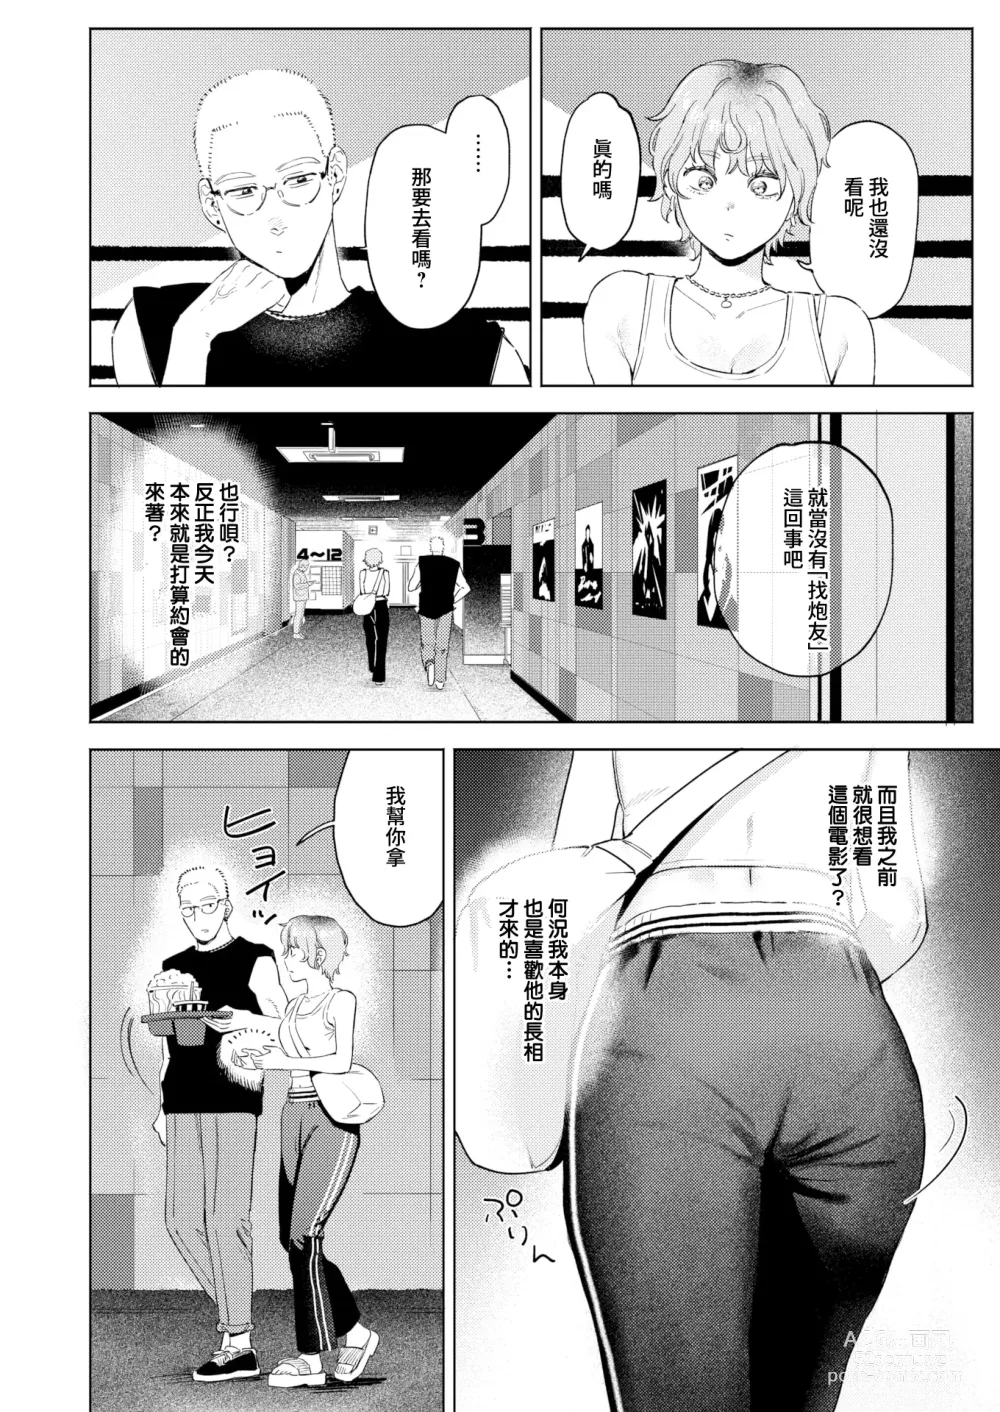 Page 6 of manga 搭錯紅線